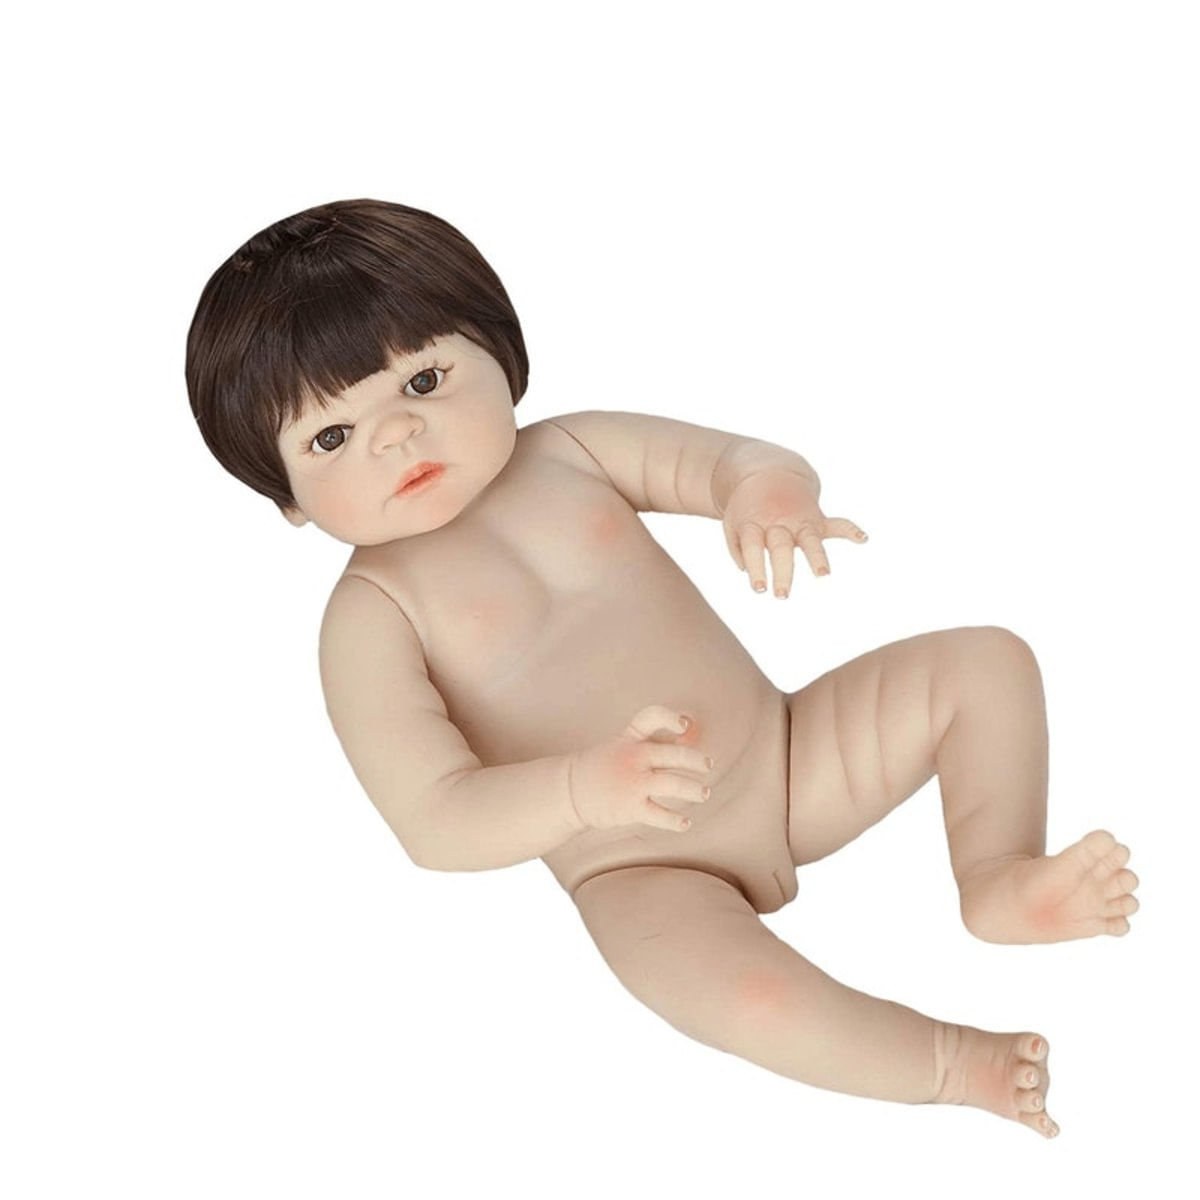 Boneca Bebê Reborn Menina Parece Real Toda Em Silicone 55 Cm